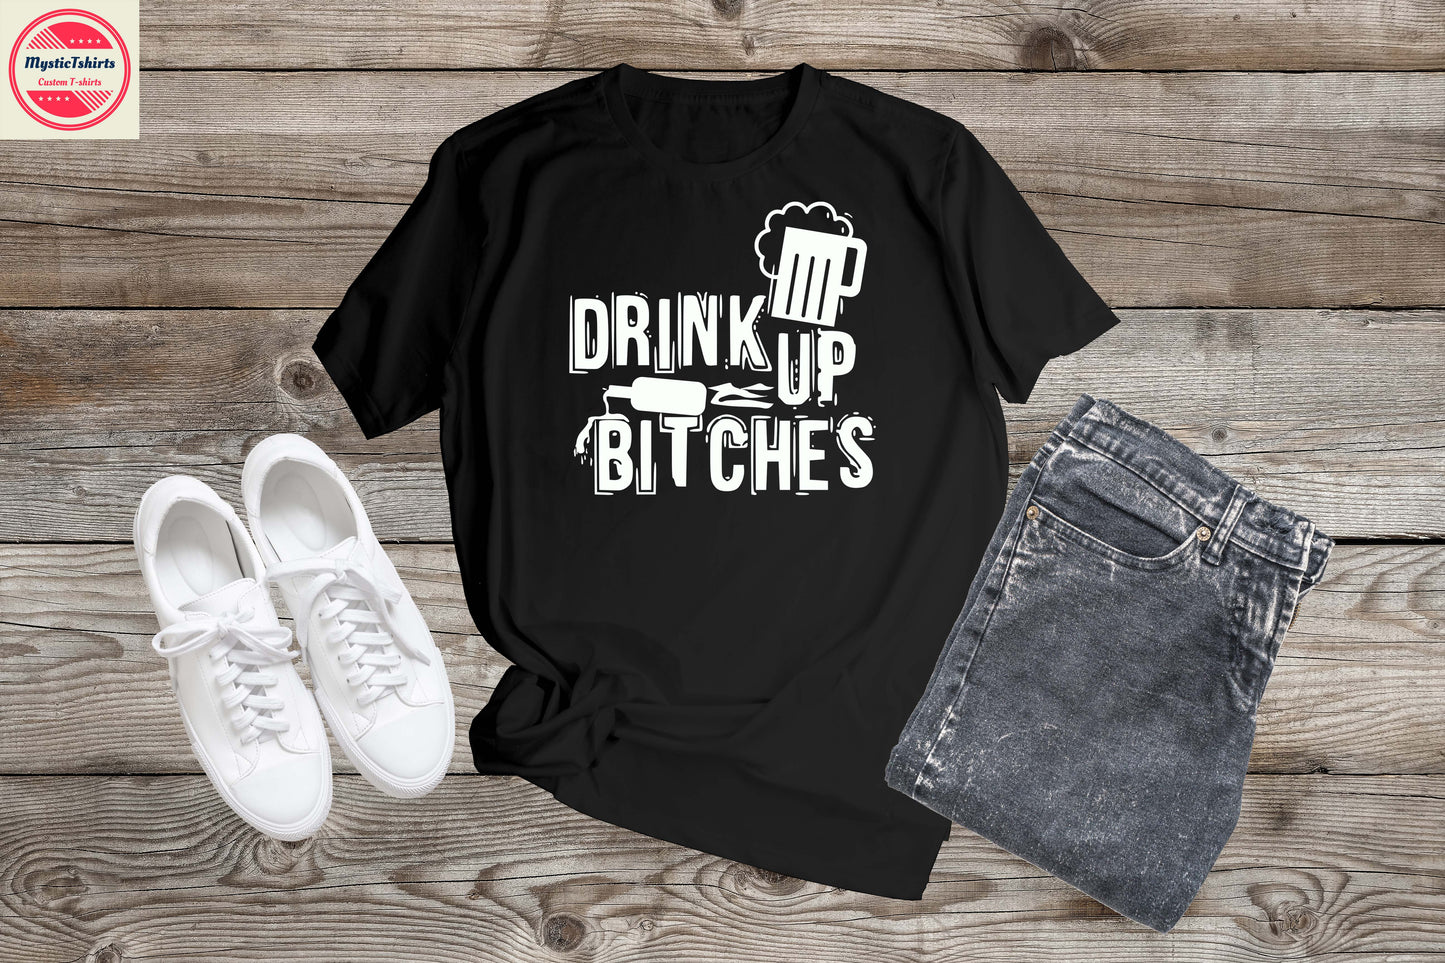 122. DRINK UP BITCHES, Custom Made Shirt, Personalized T-Shirt, Custom Text, Make Your Own Shirt, Custom Tee